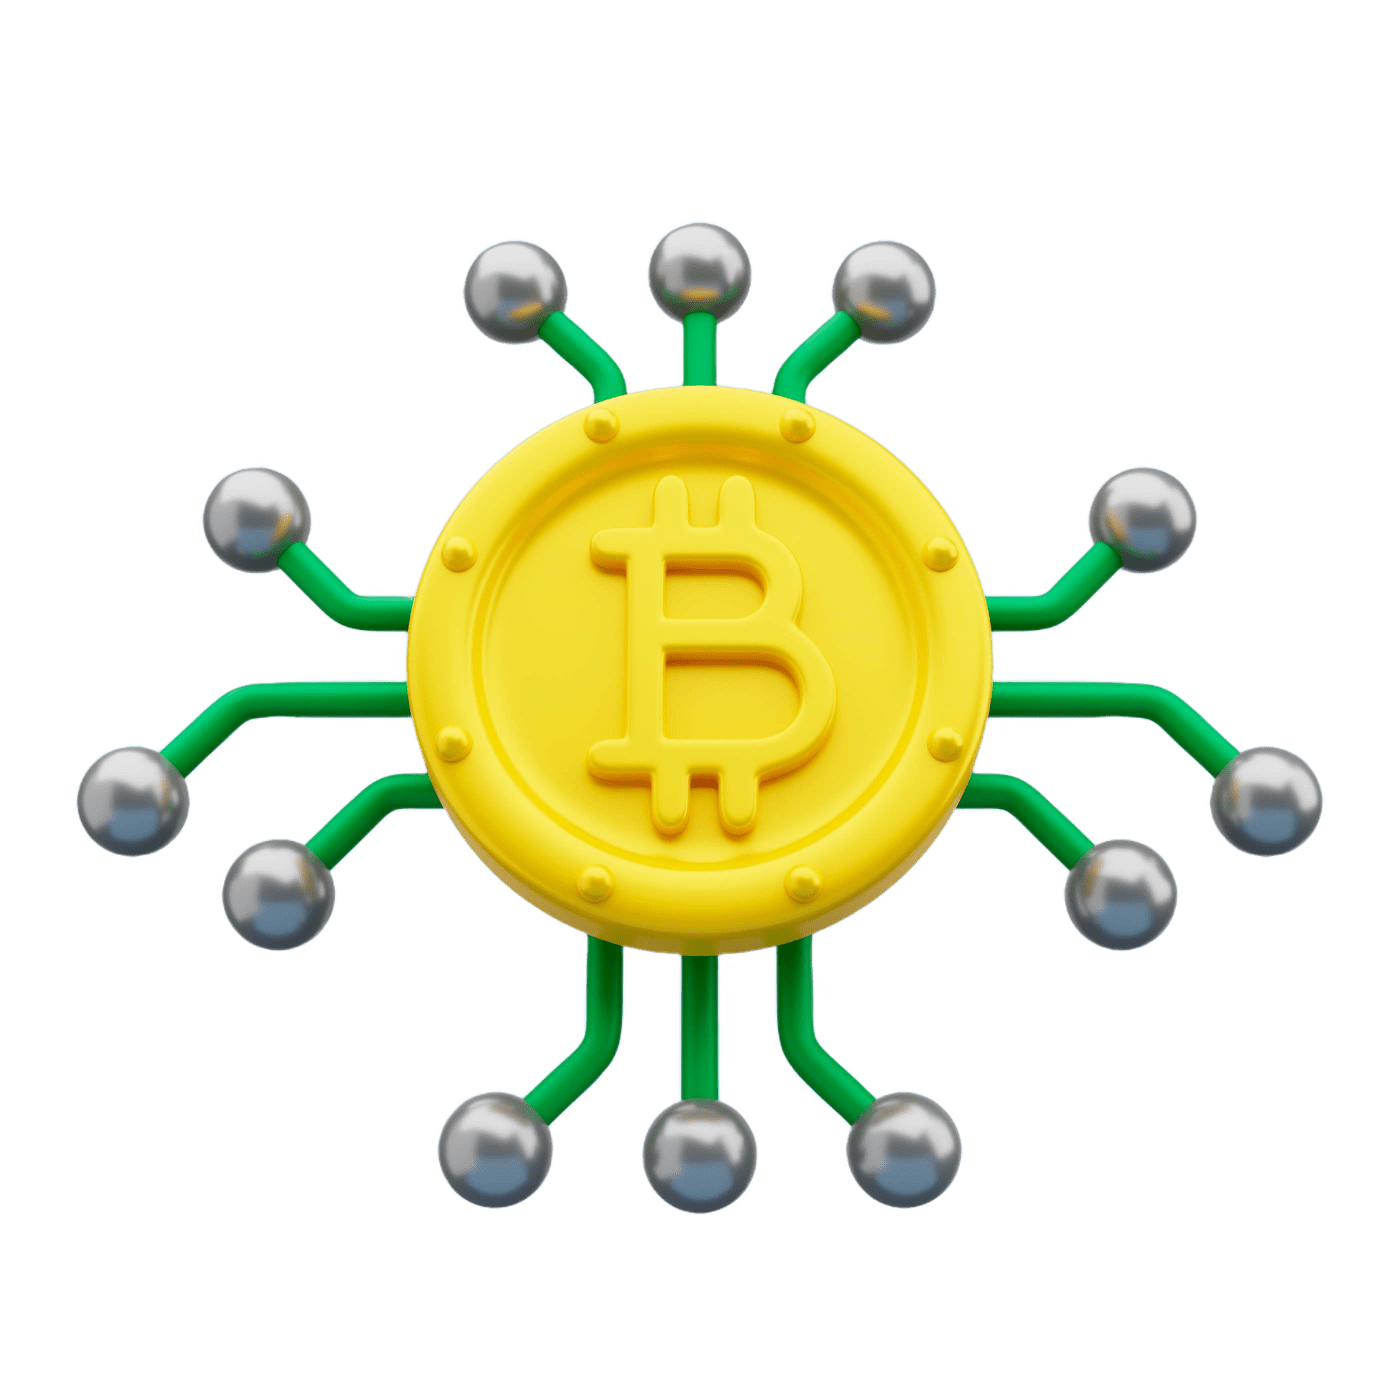 3d render of a Bitcoin network symbol